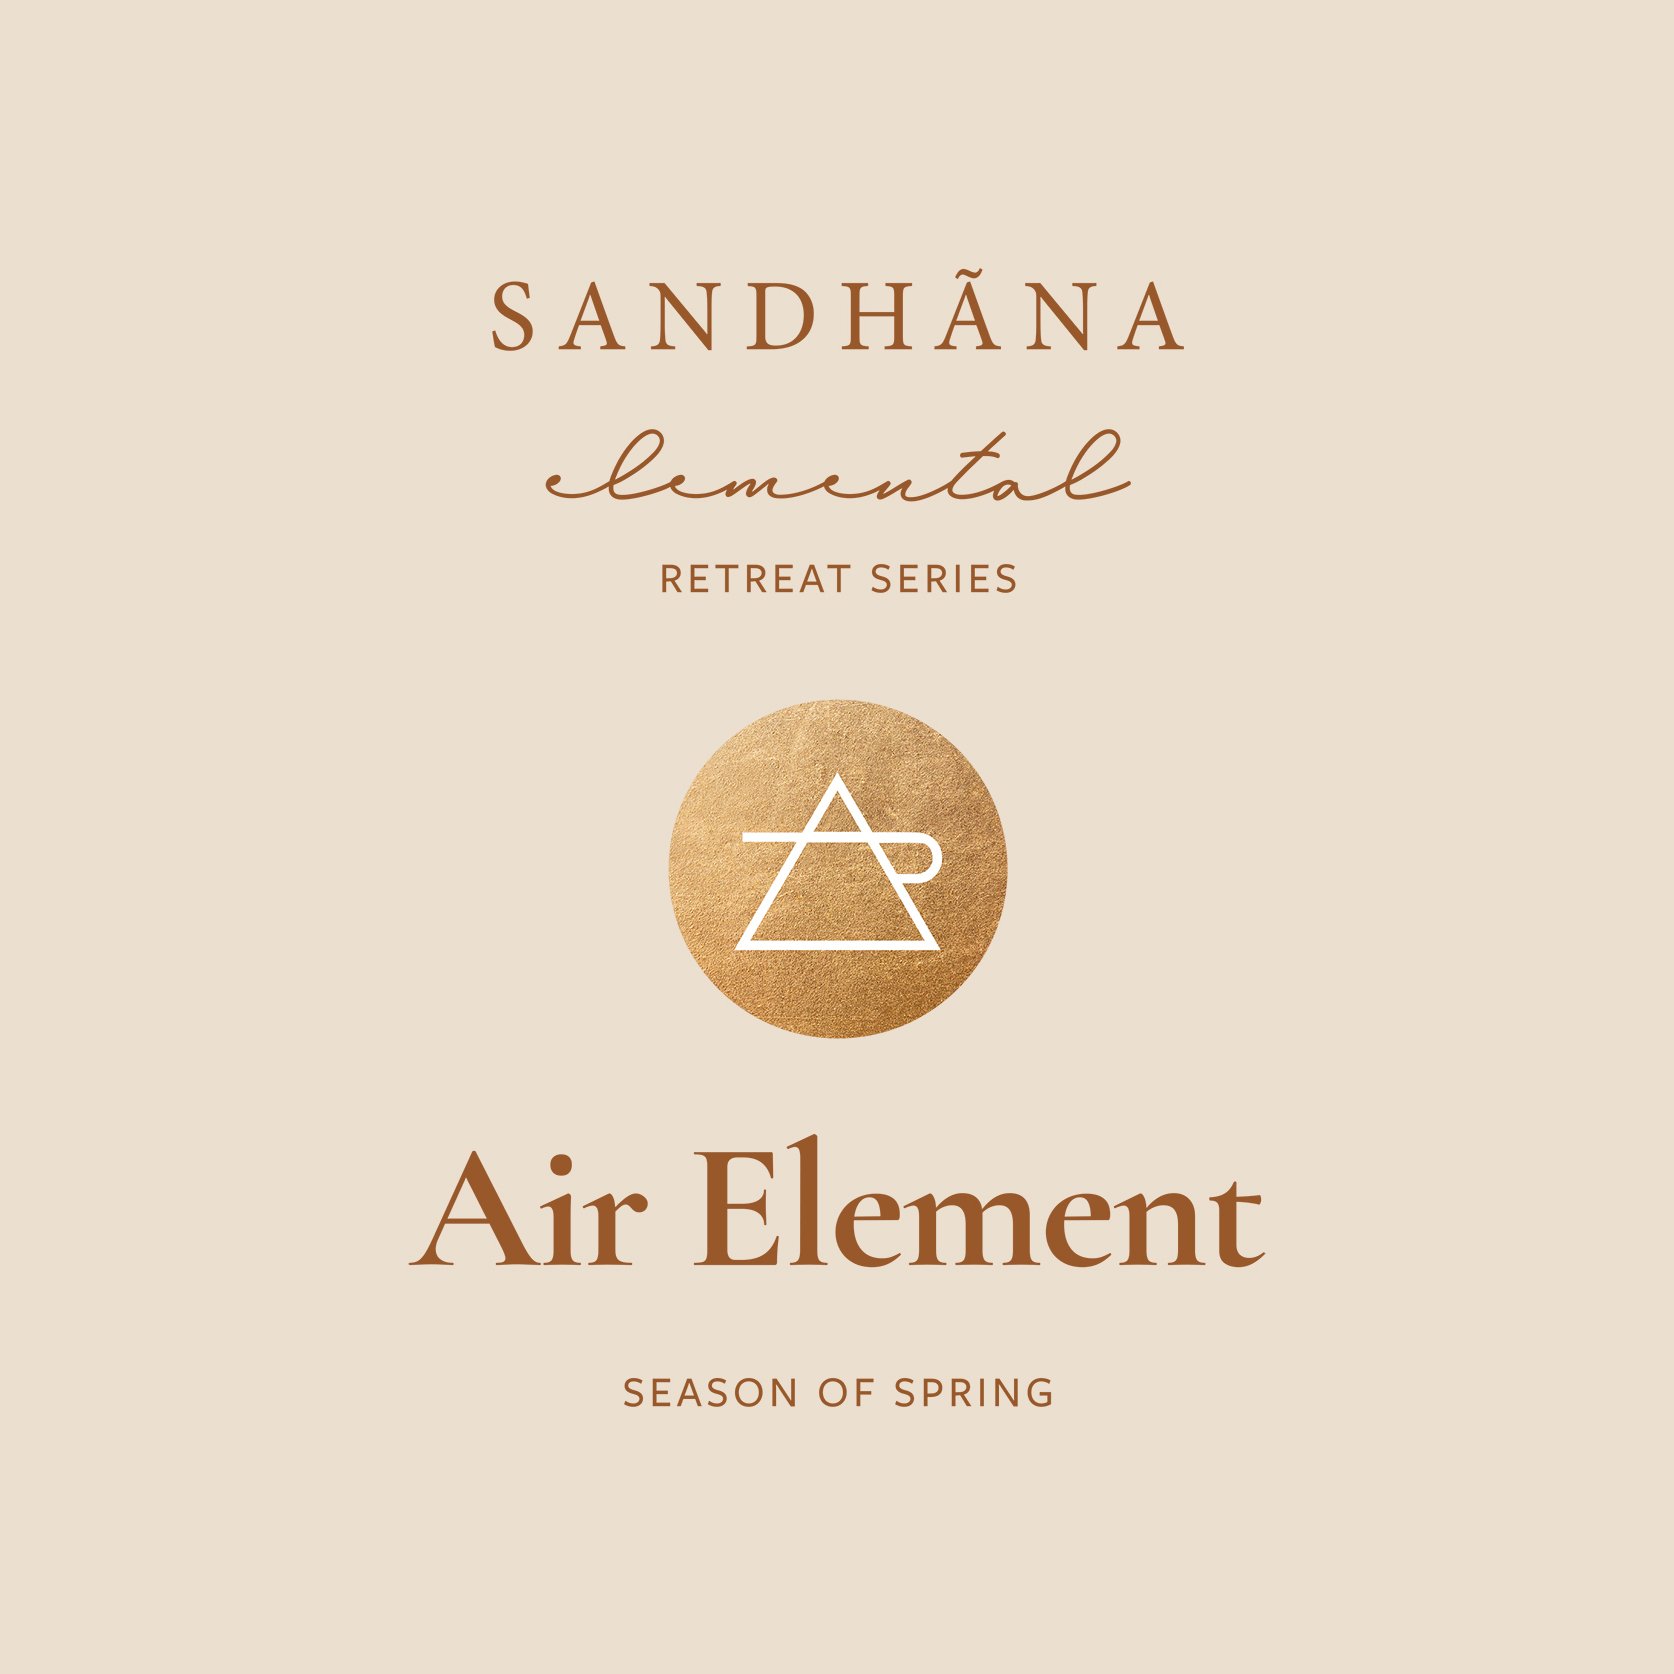 Sandhana_AirElement_retreats_title.jpg